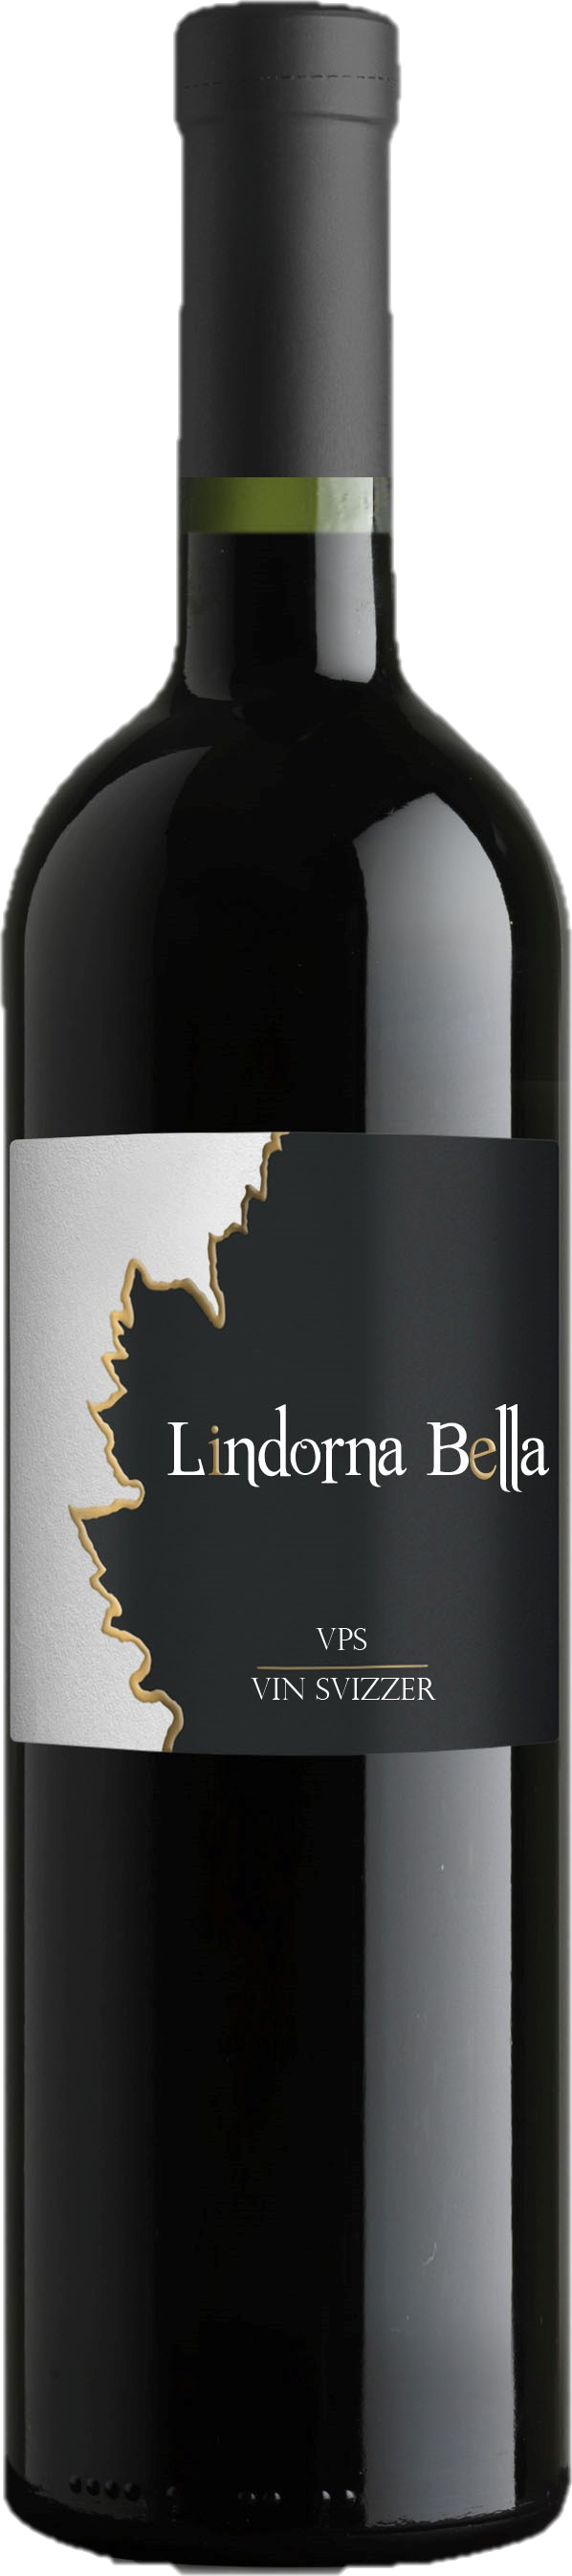 Lindorna Bella Vin de Pays Suisse